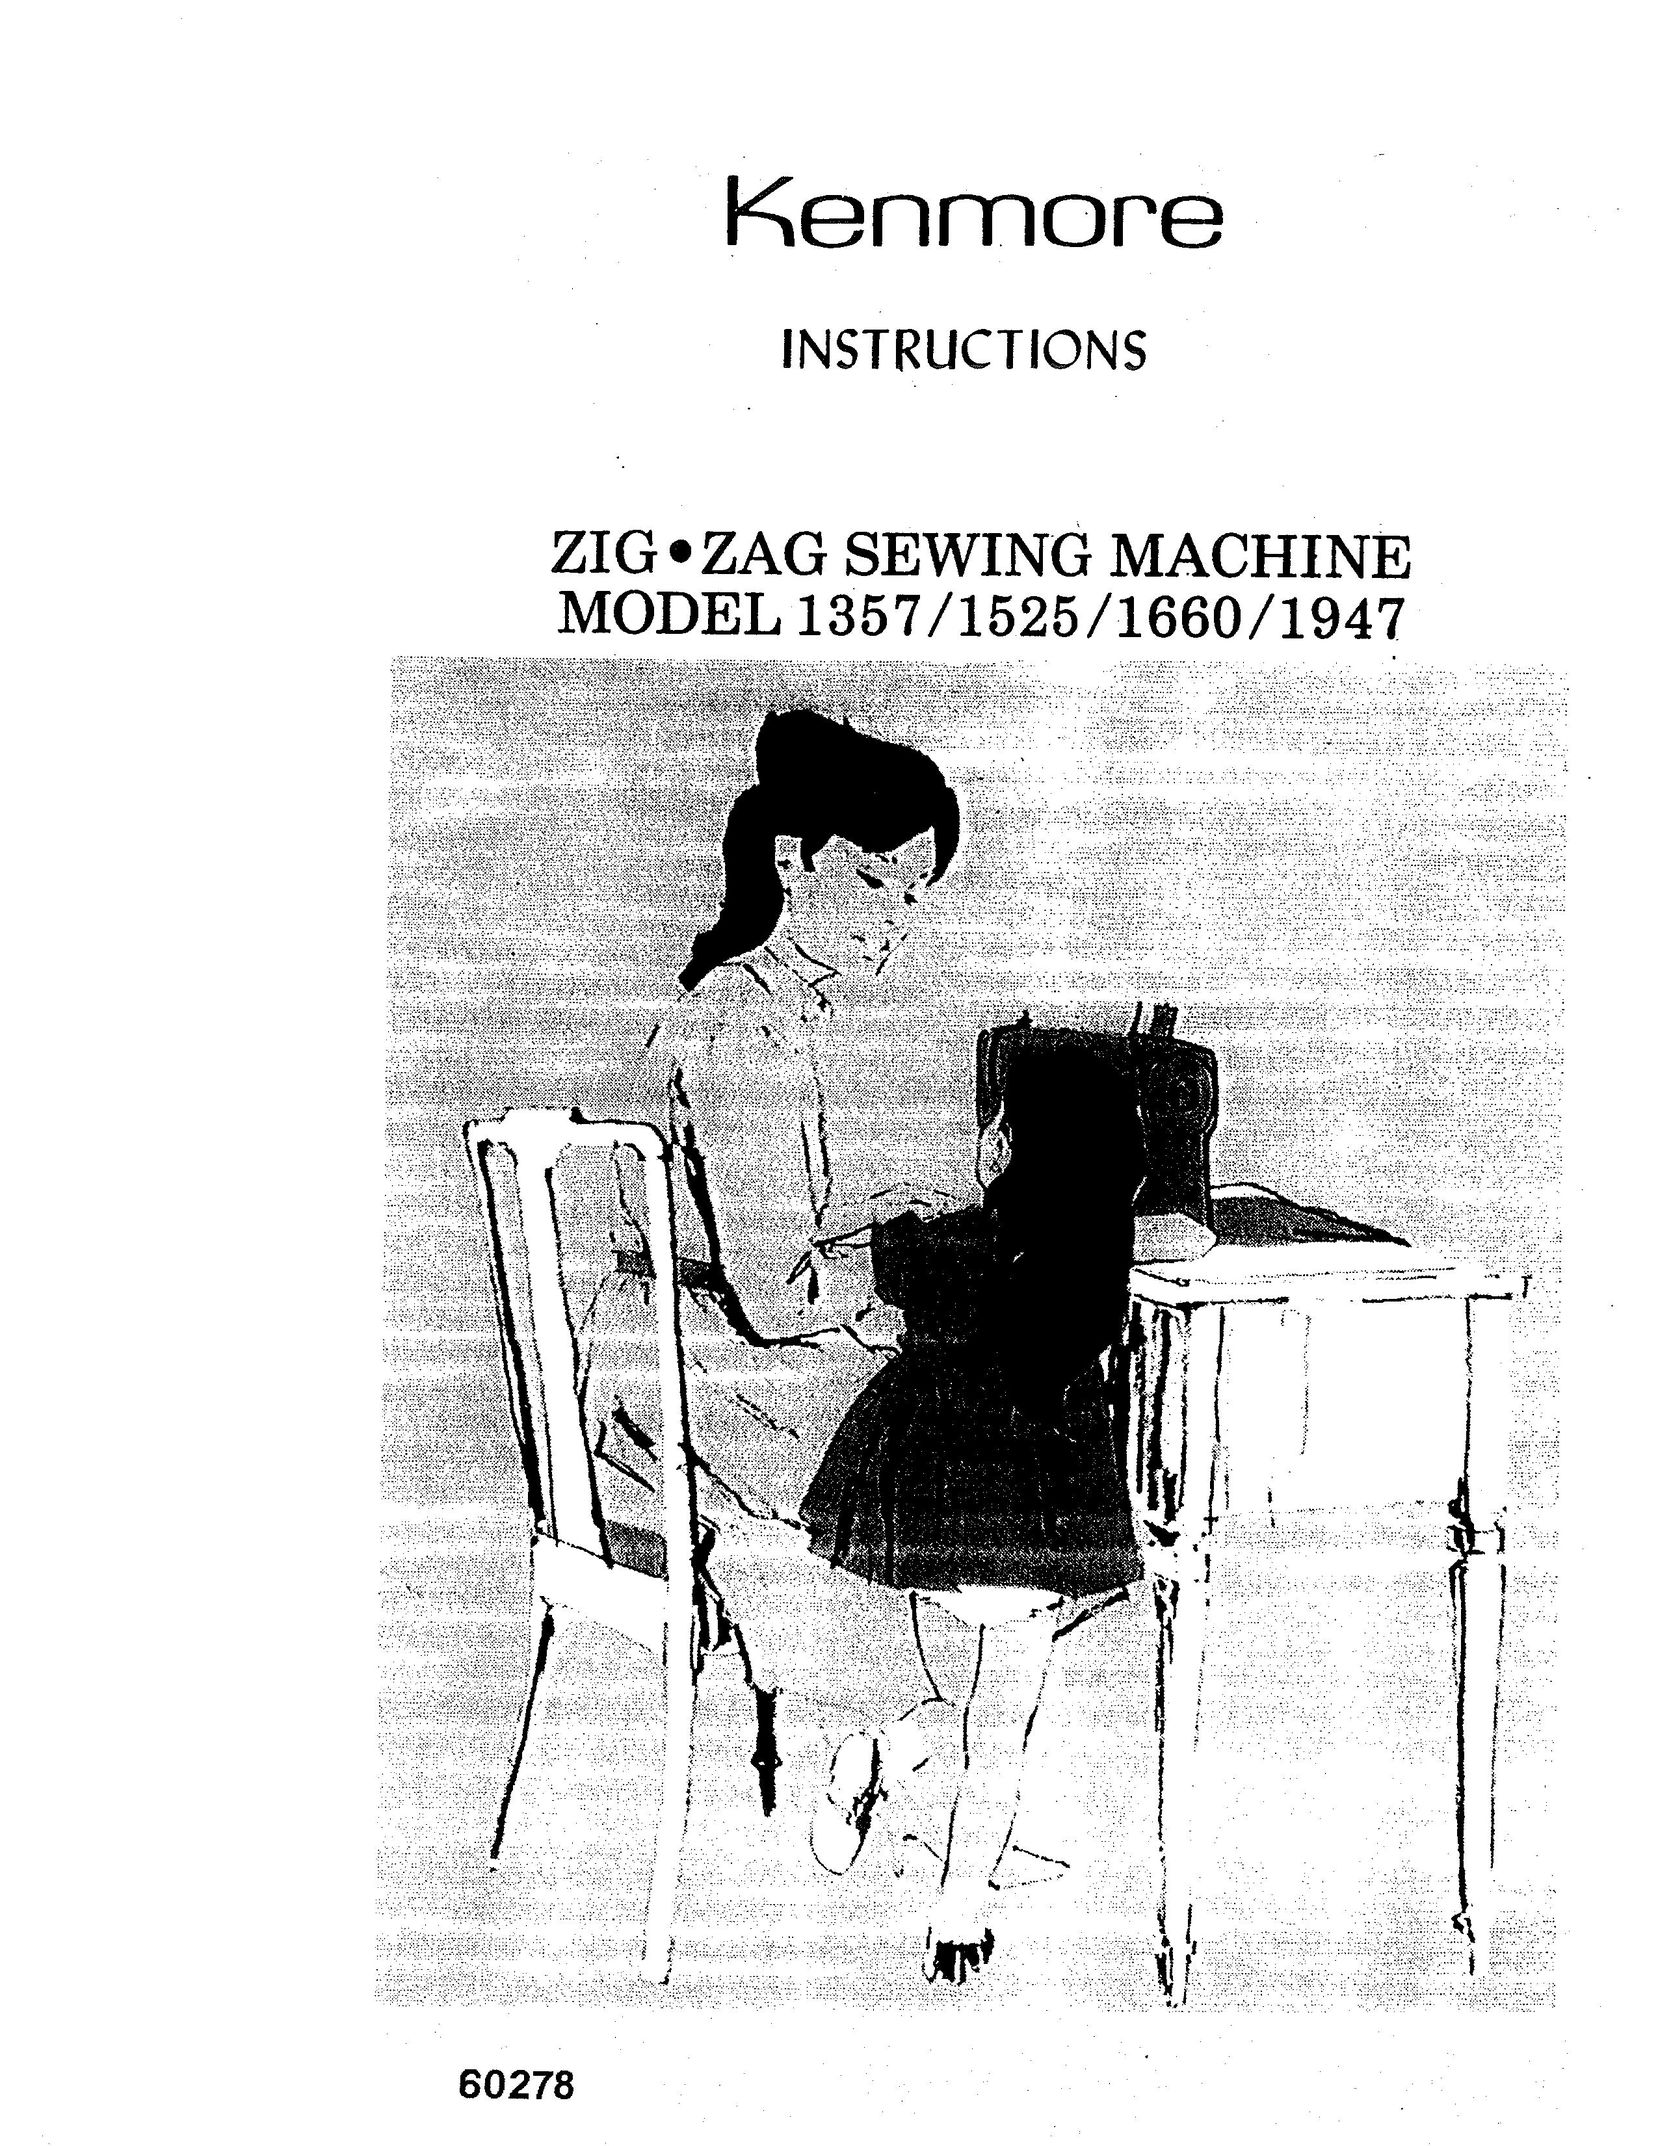 Kenmore 1357 Sewing Machine User Manual